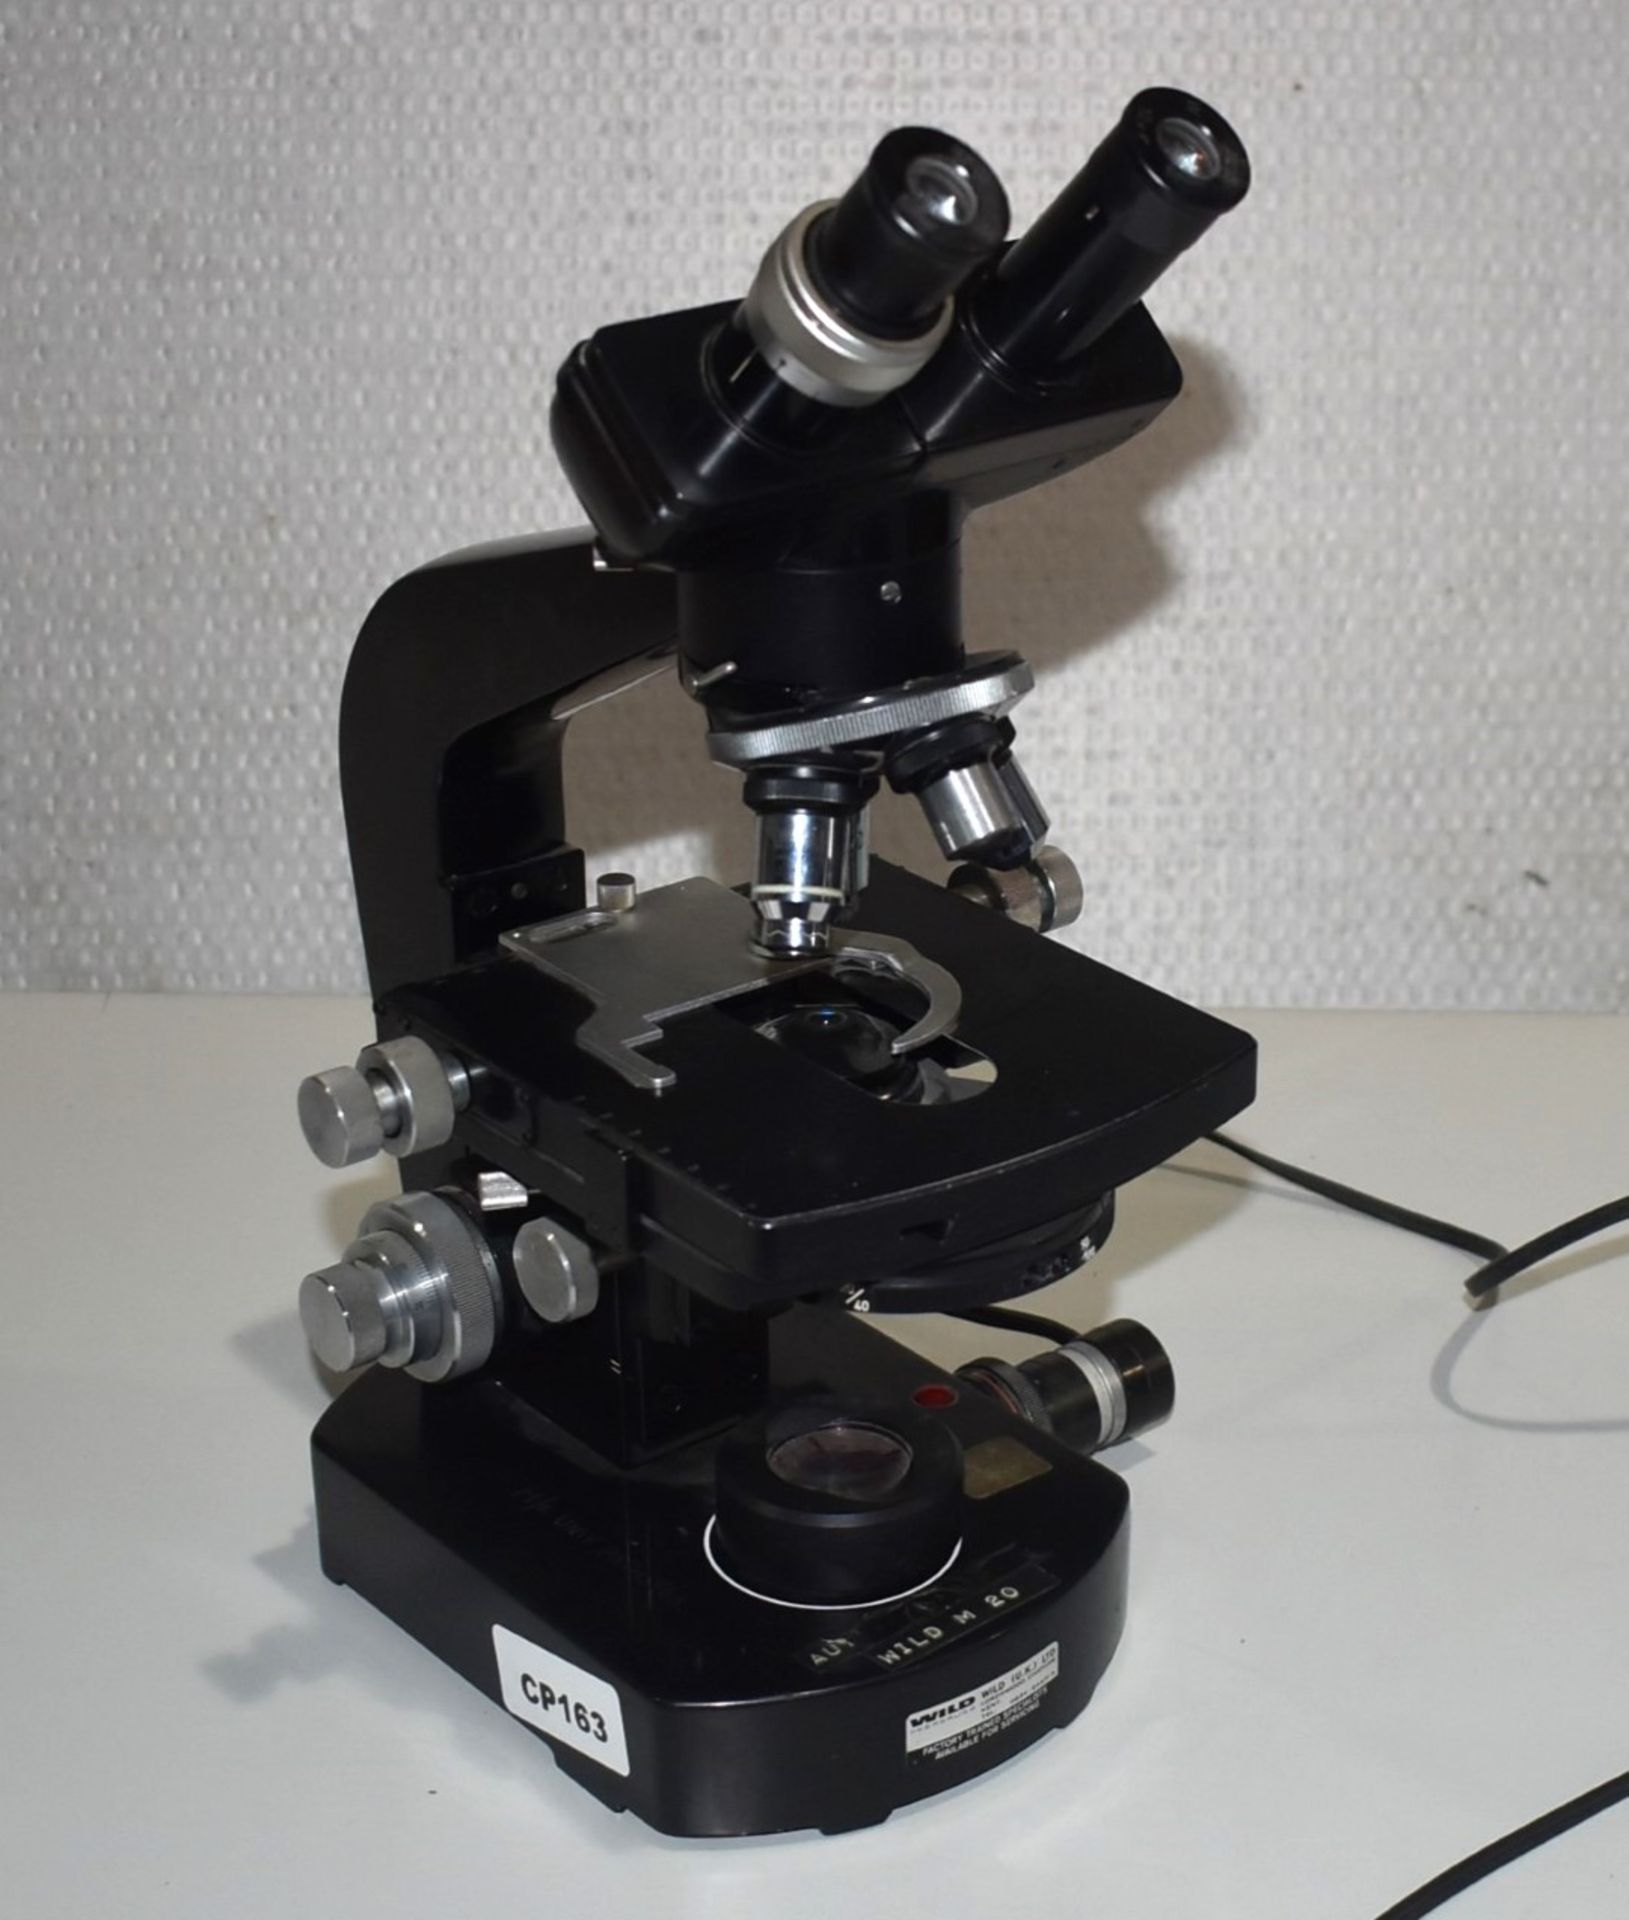 1 x Wild M20 Microscope CP163 - Image 8 of 22